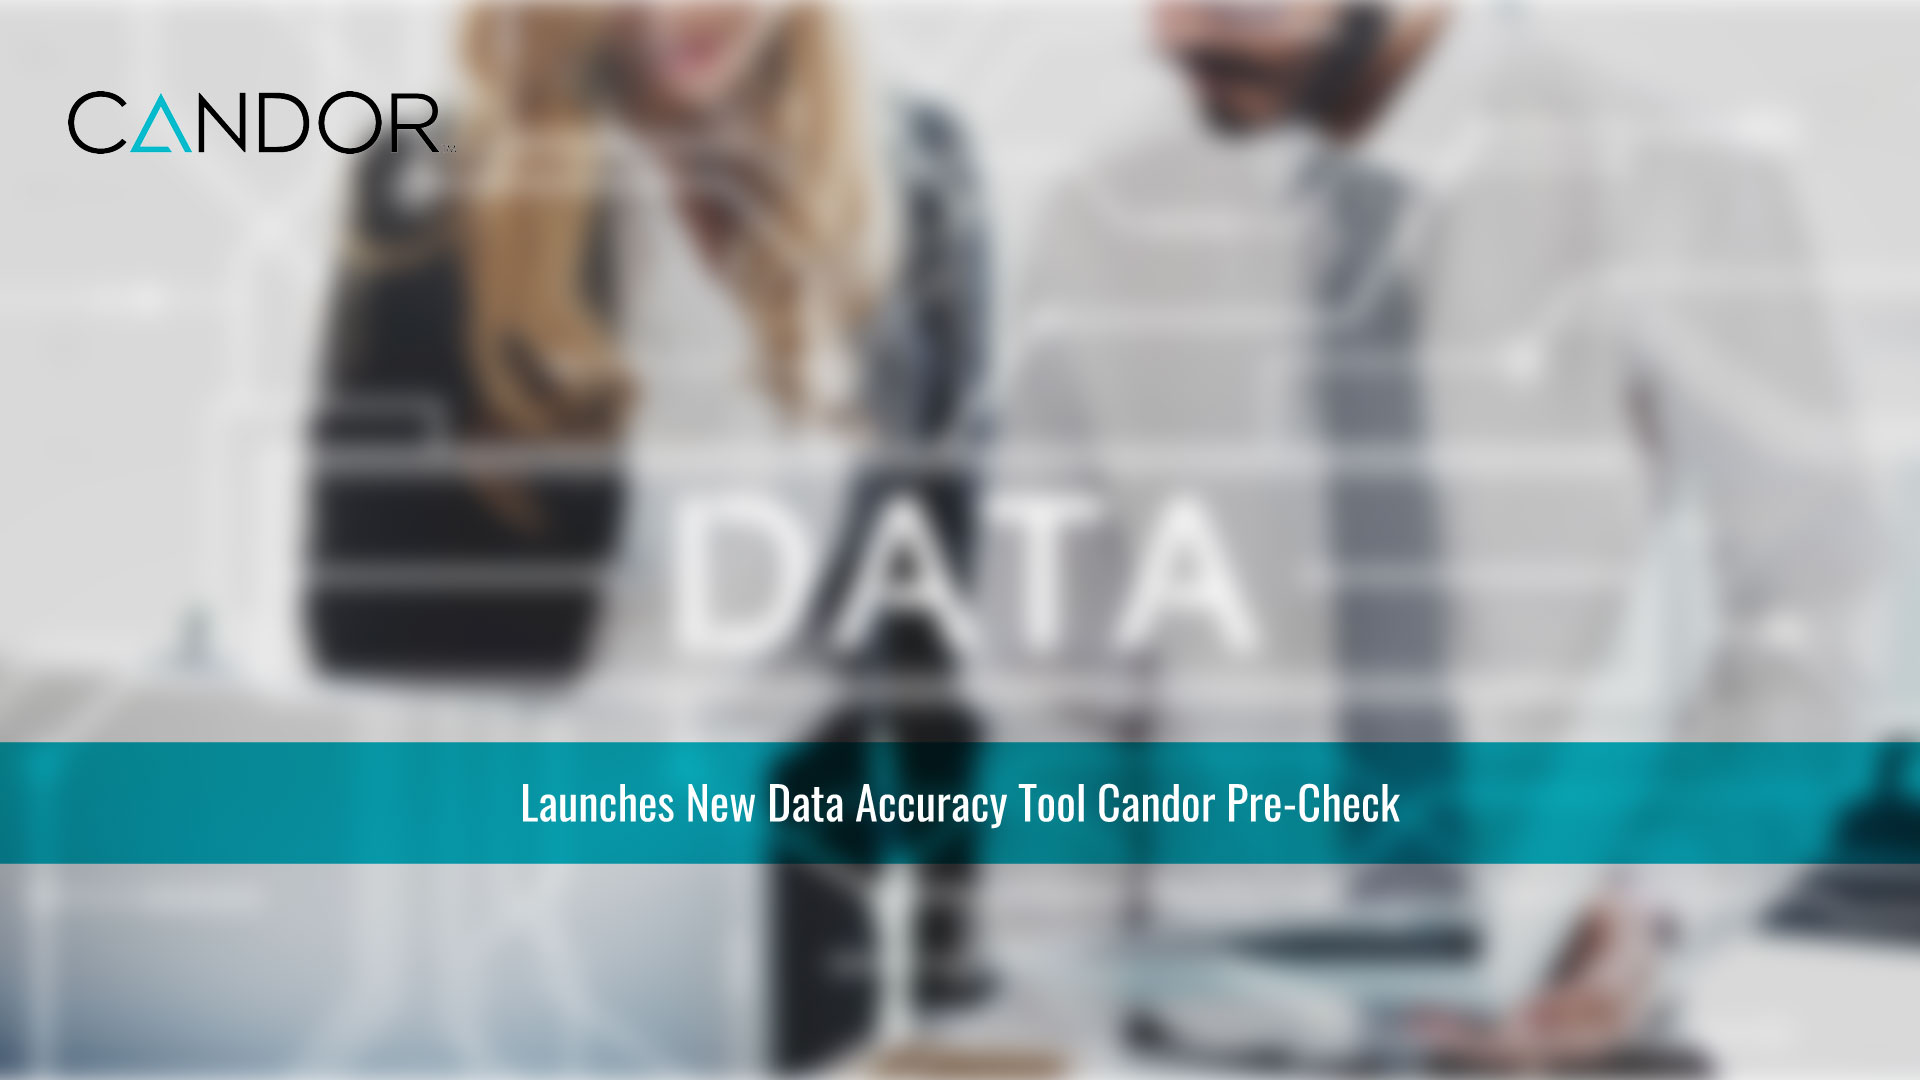 Candor Technology Launches New Data Accuracy Tool Candor Pre-Check